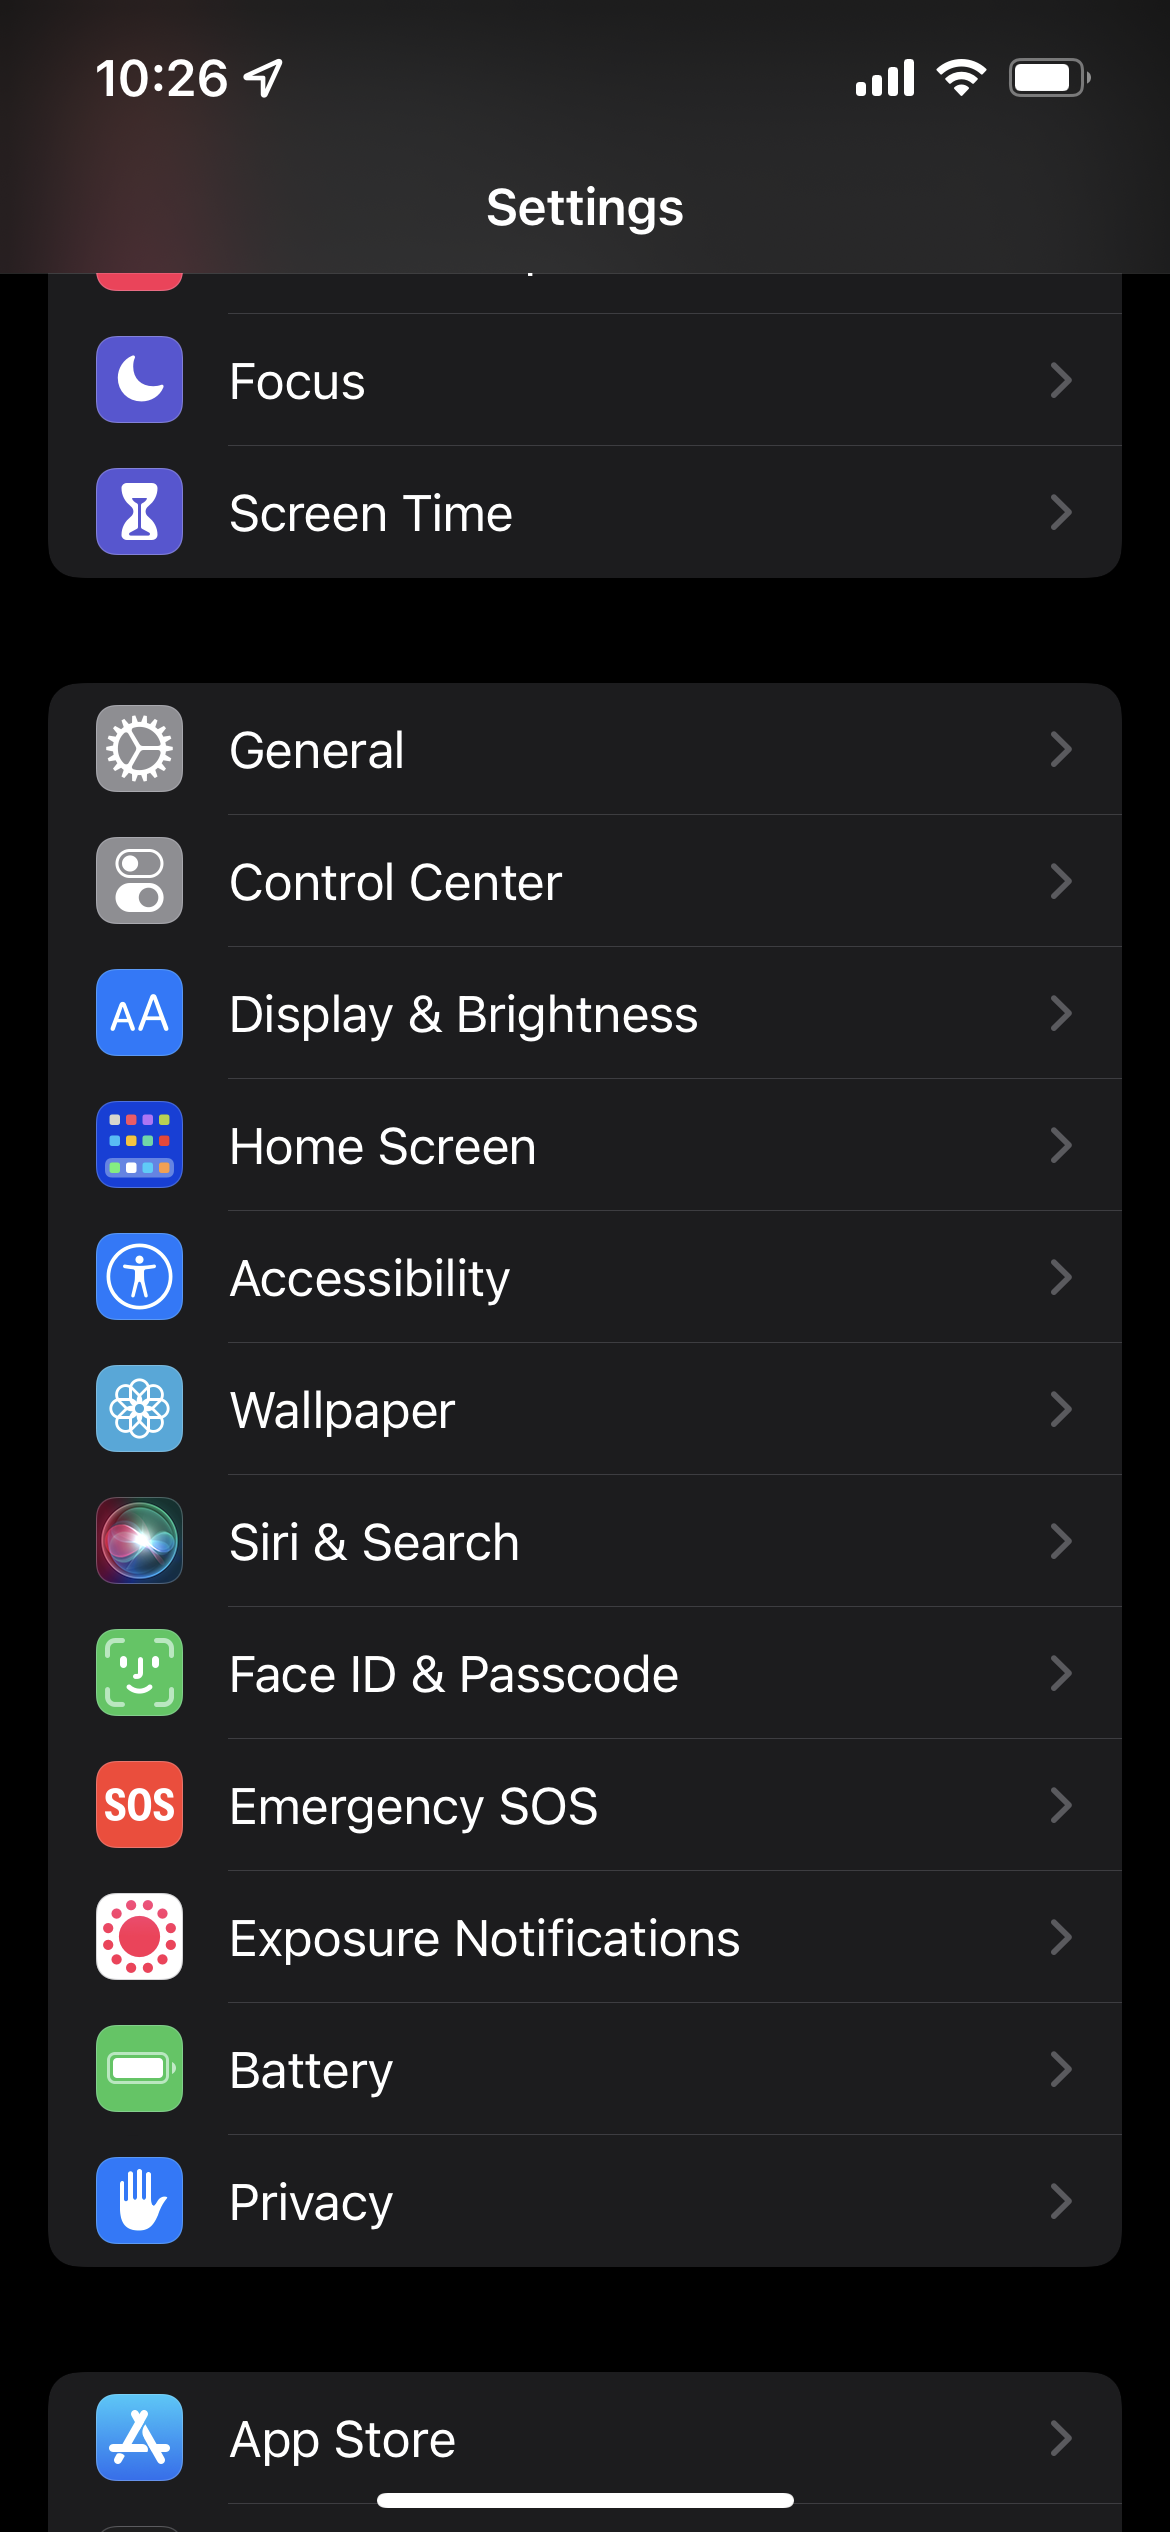 iPhone settings in iOS 15